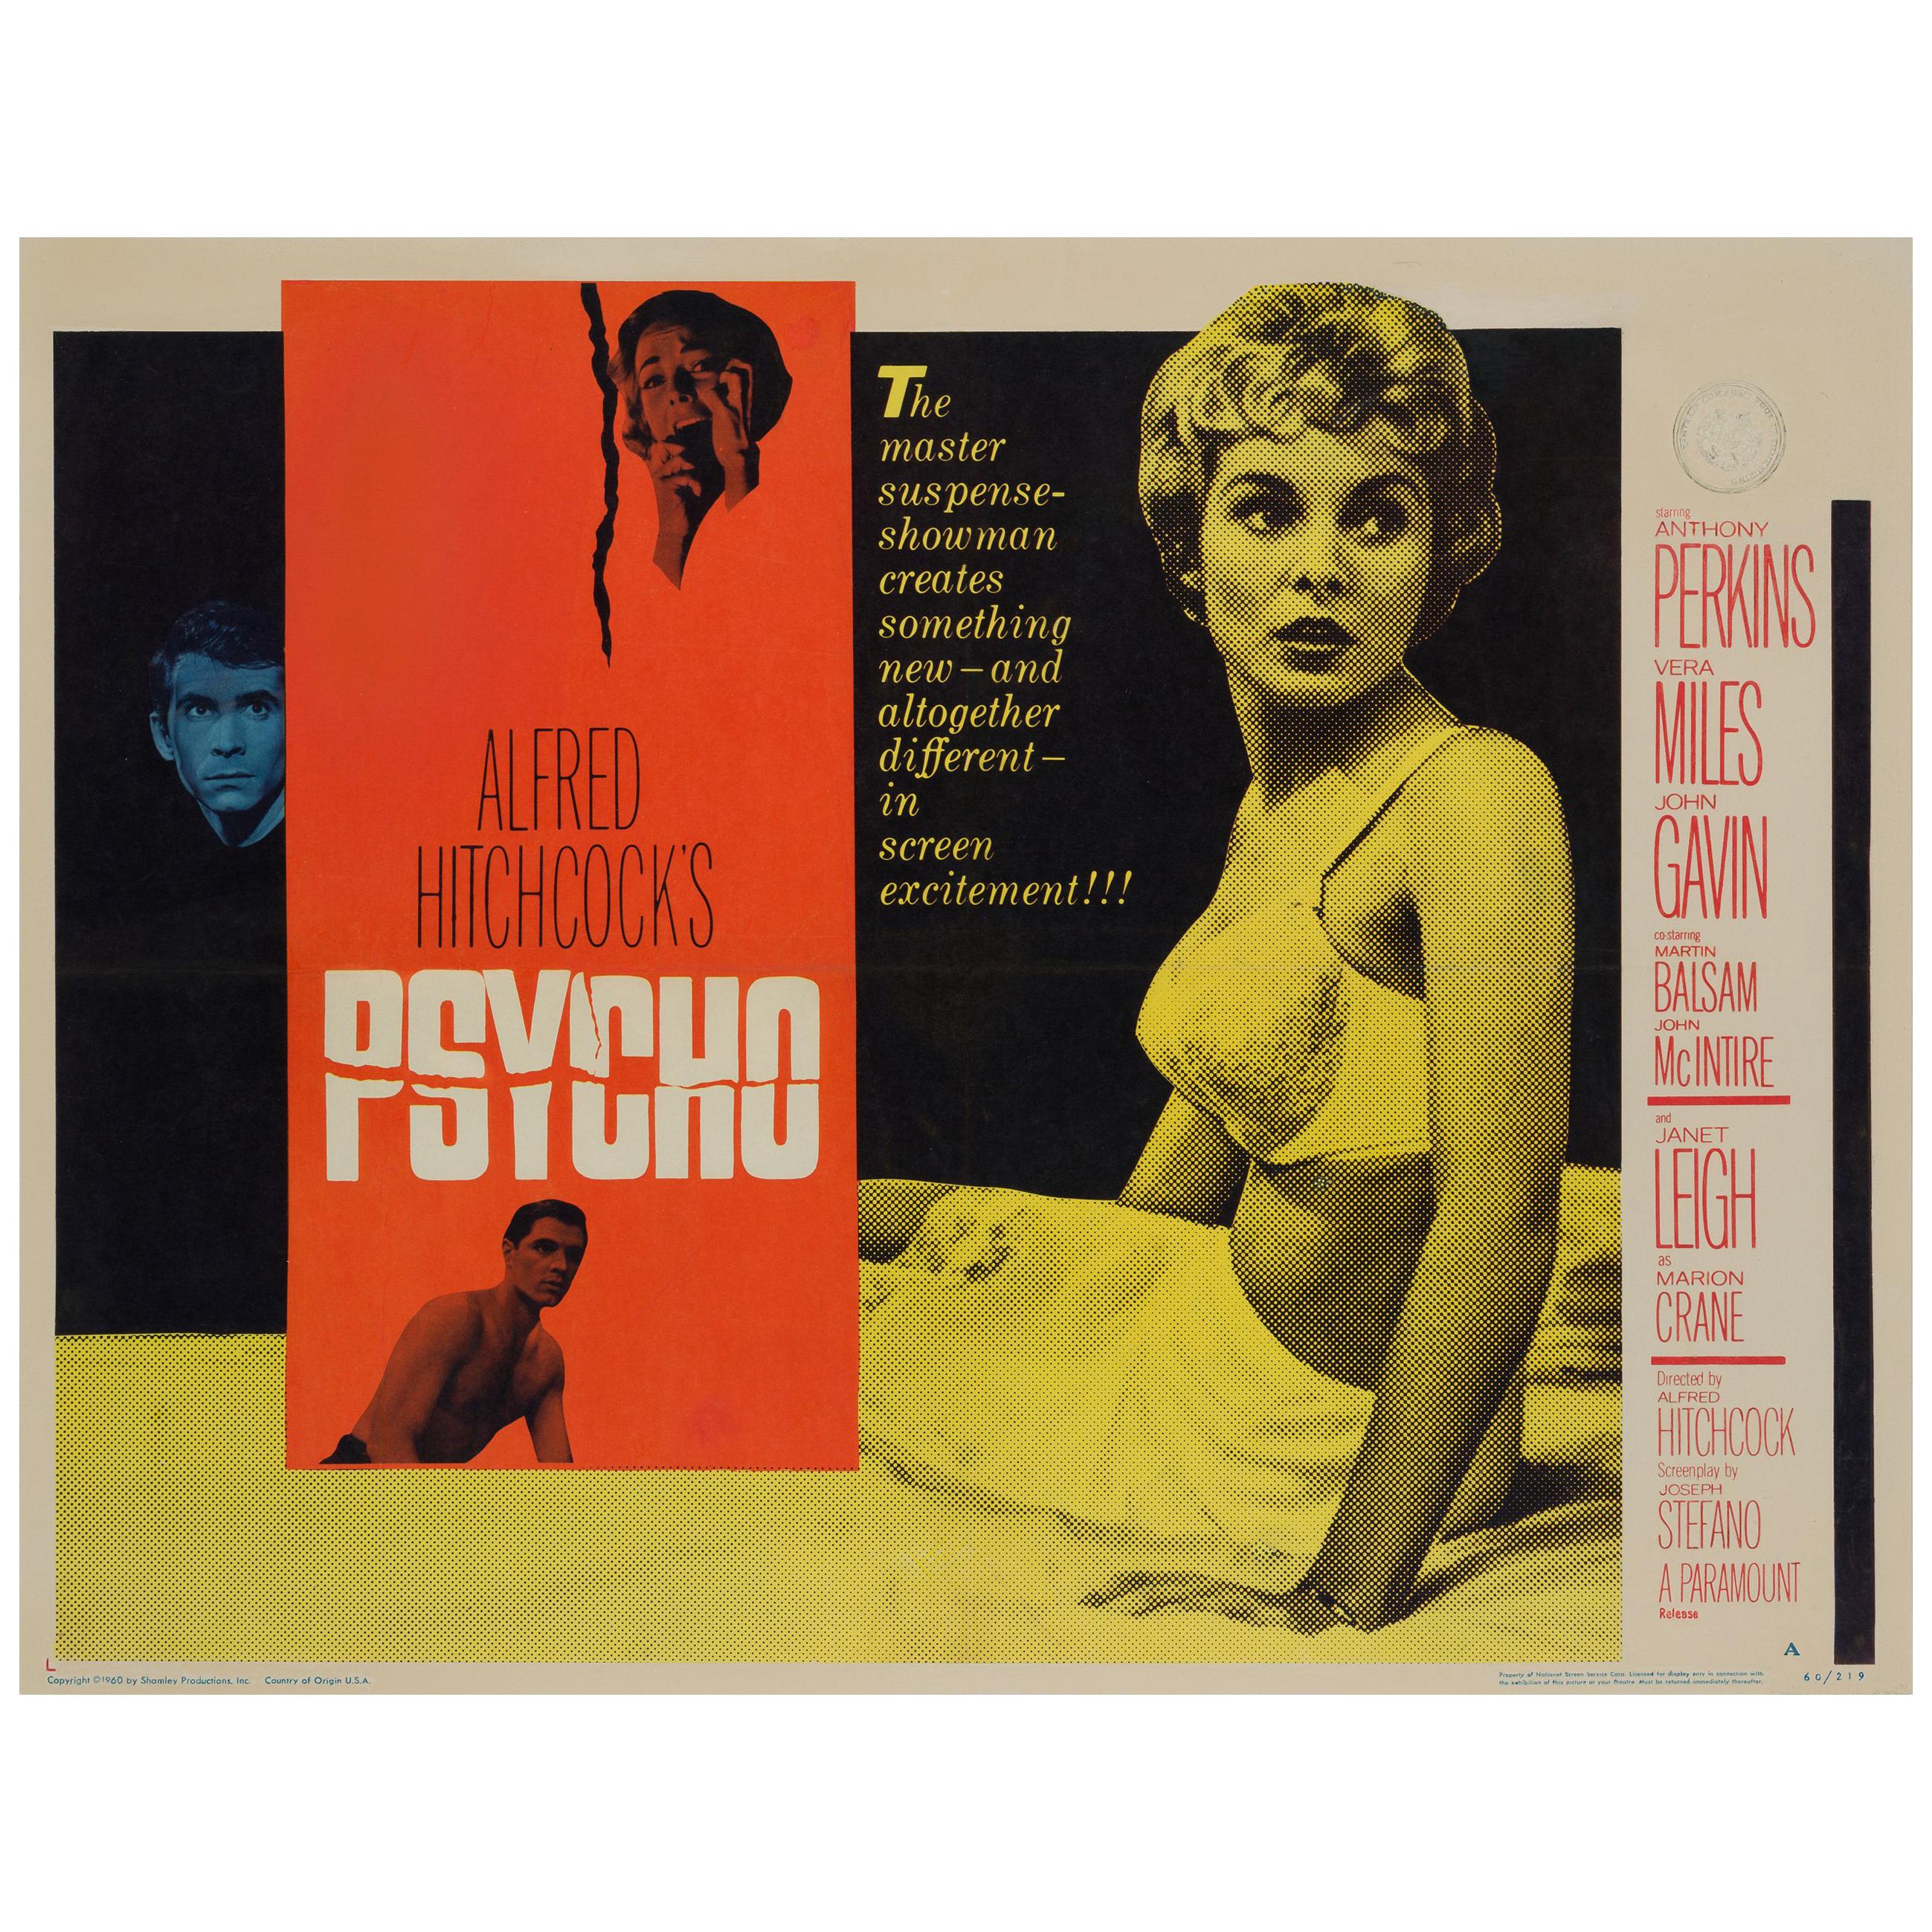 "Psycho", US Film Poster, 1960